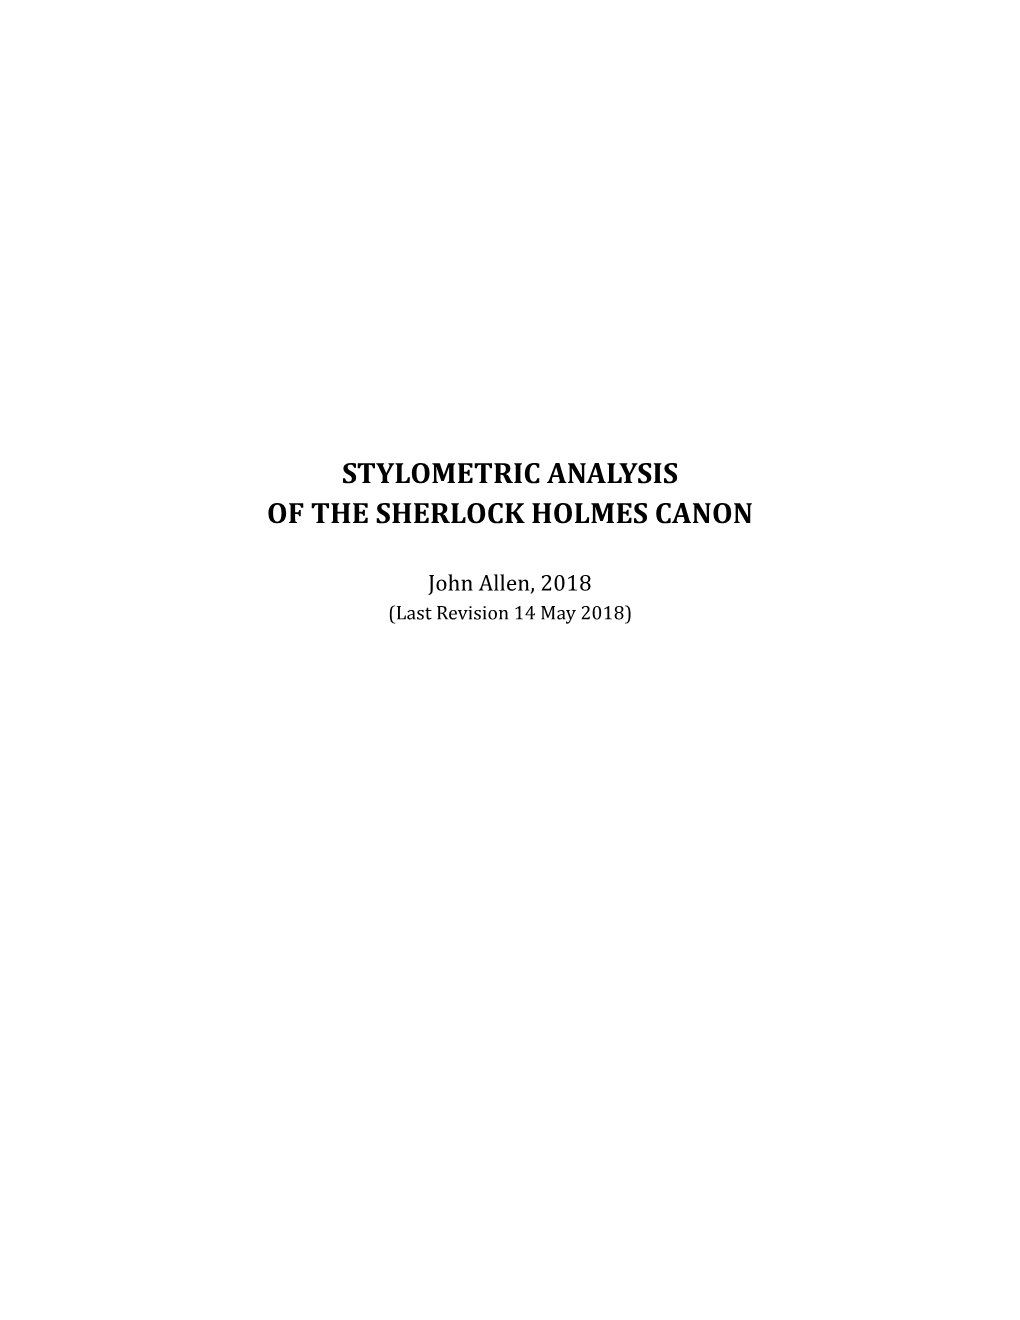 Stylometric Analysis of the Sherlock Holmes Canon